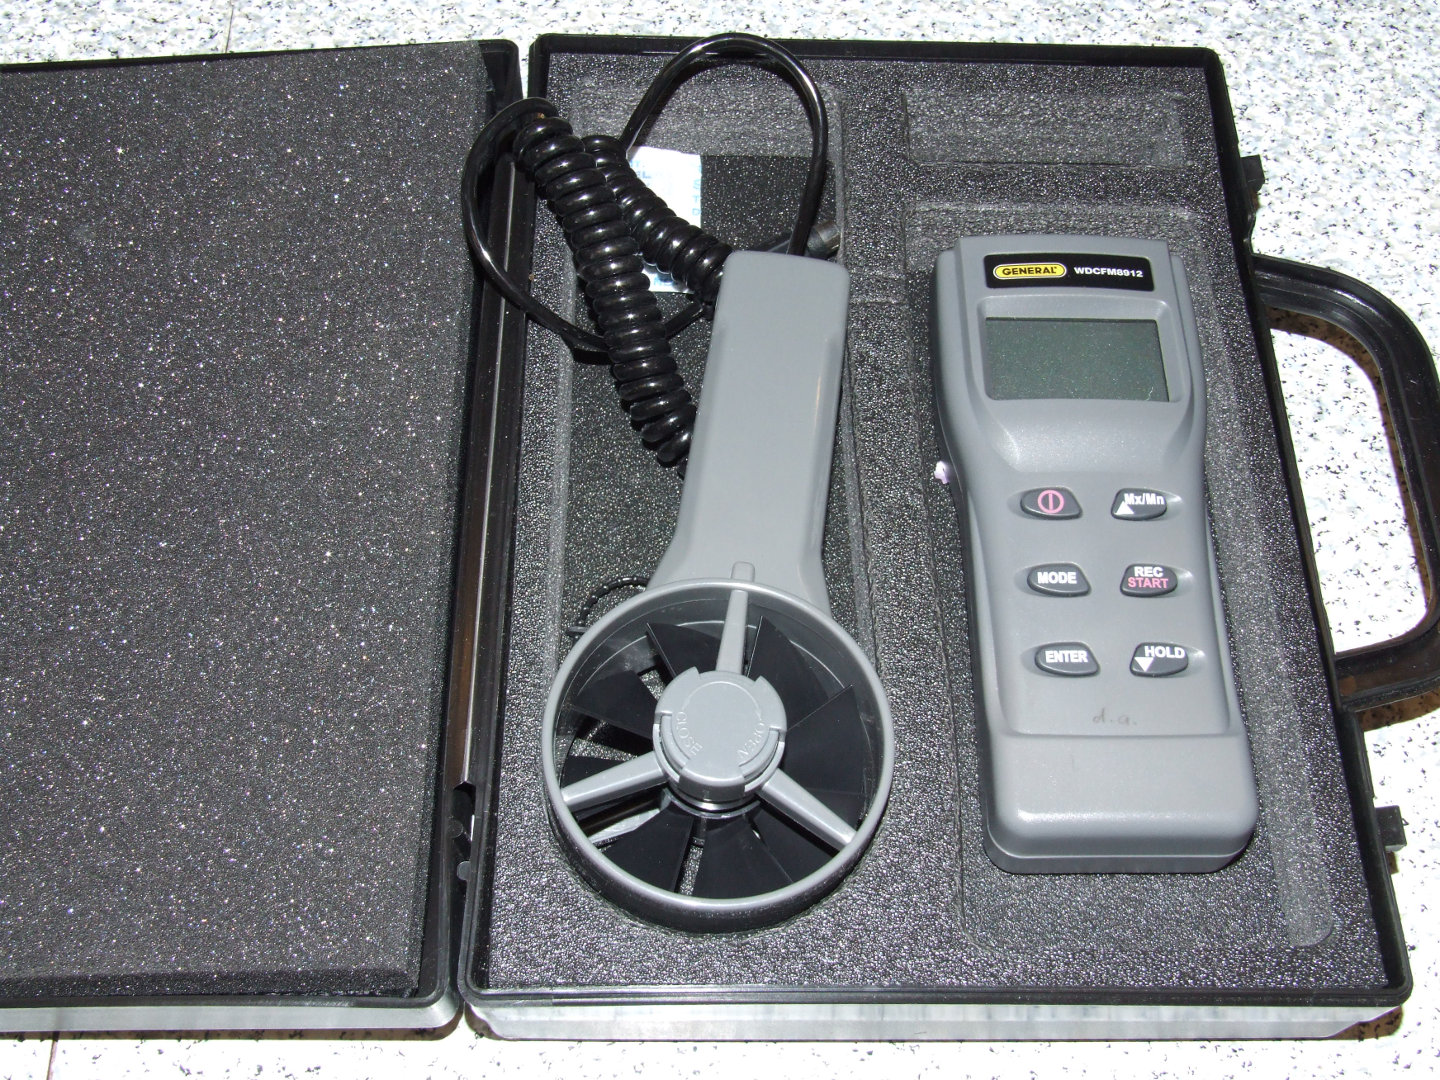 Thermoanemometer